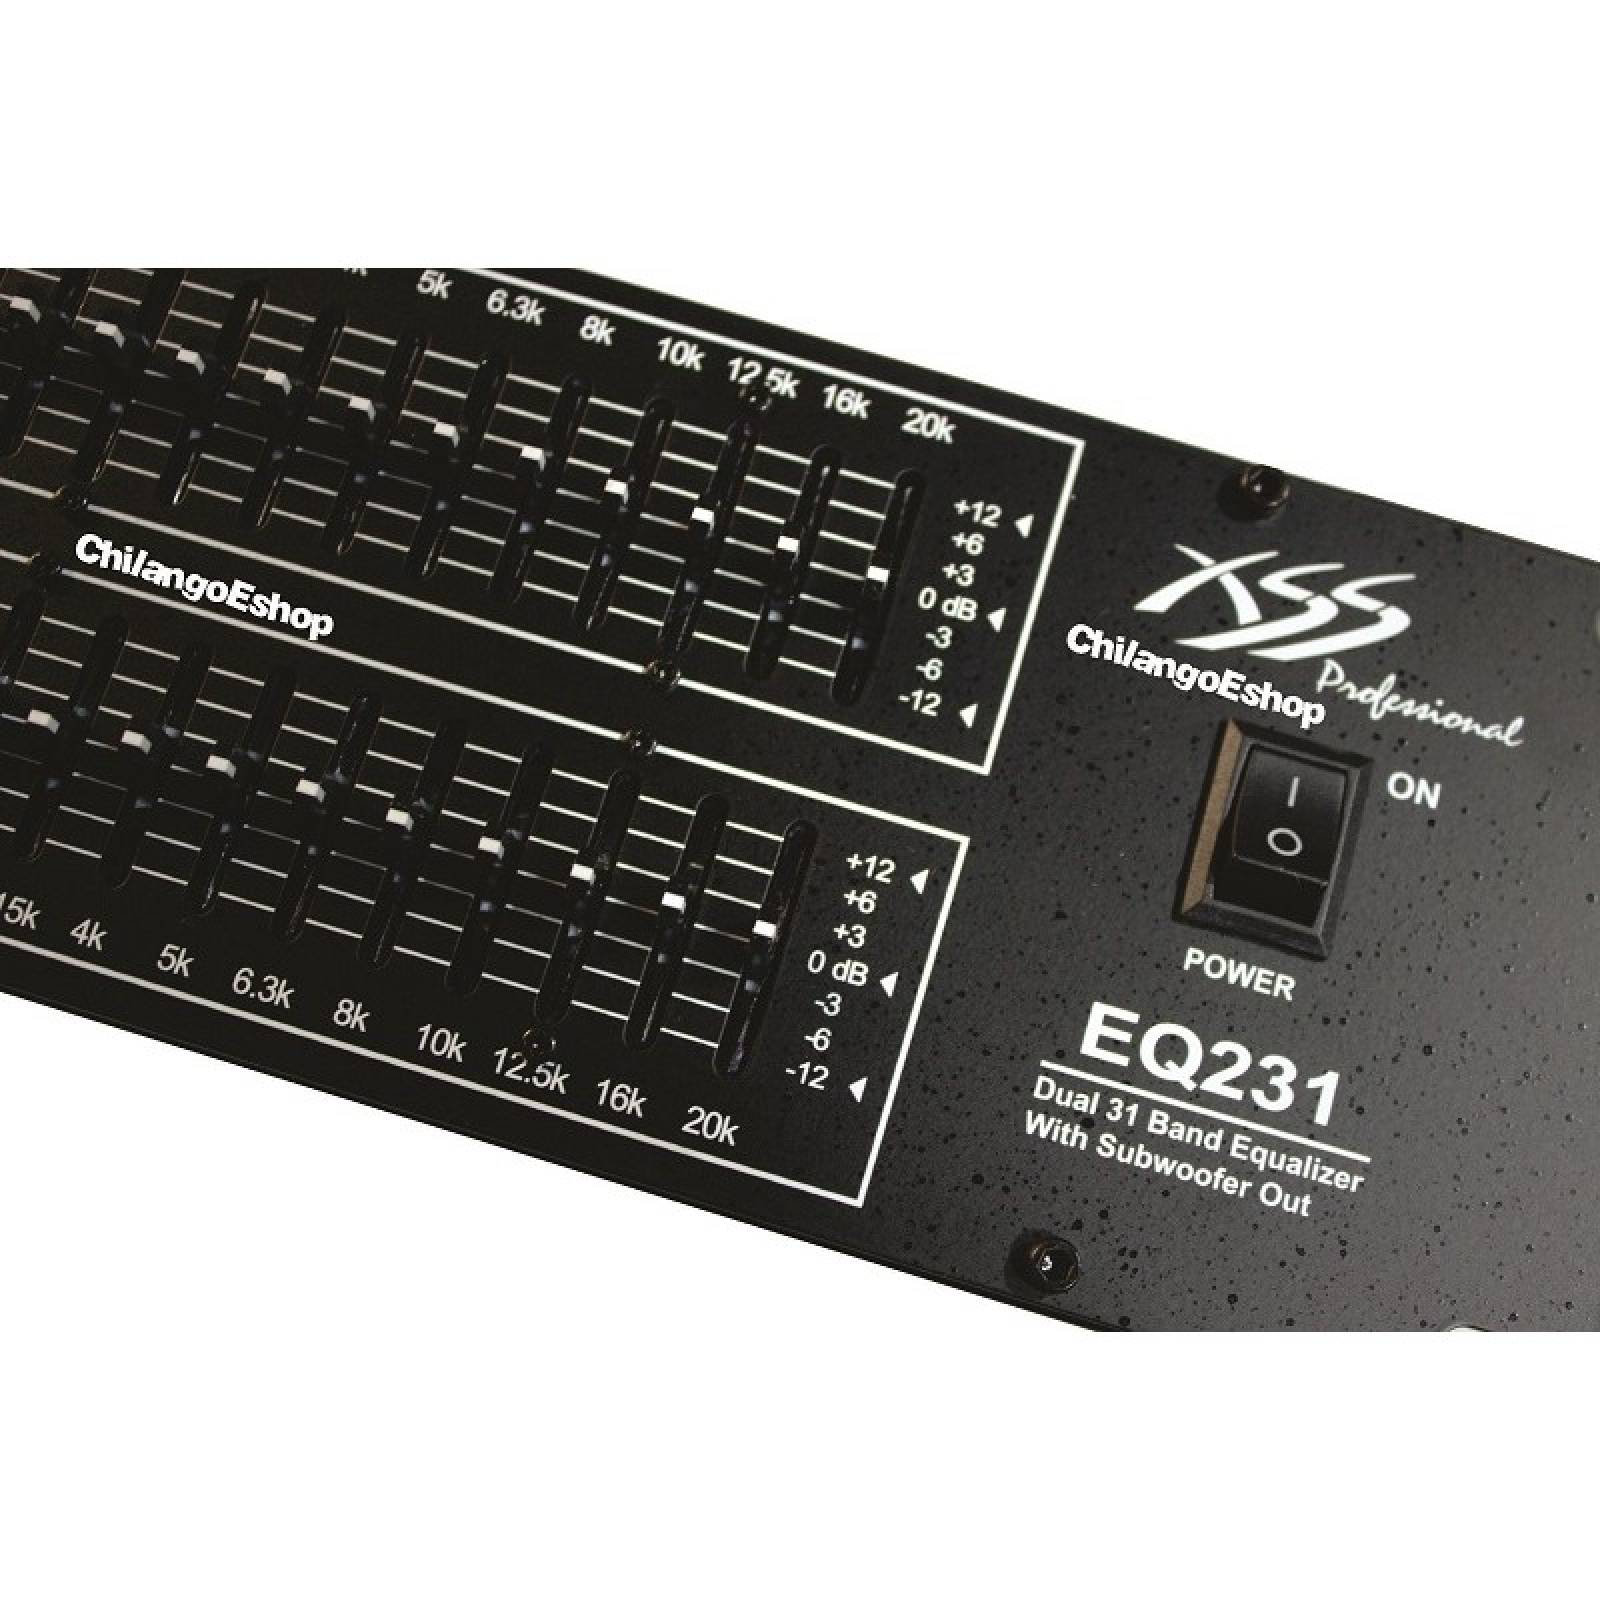 ecualizador gráfico XSS estéreo de 31 bandas + salida SUB EQ231 